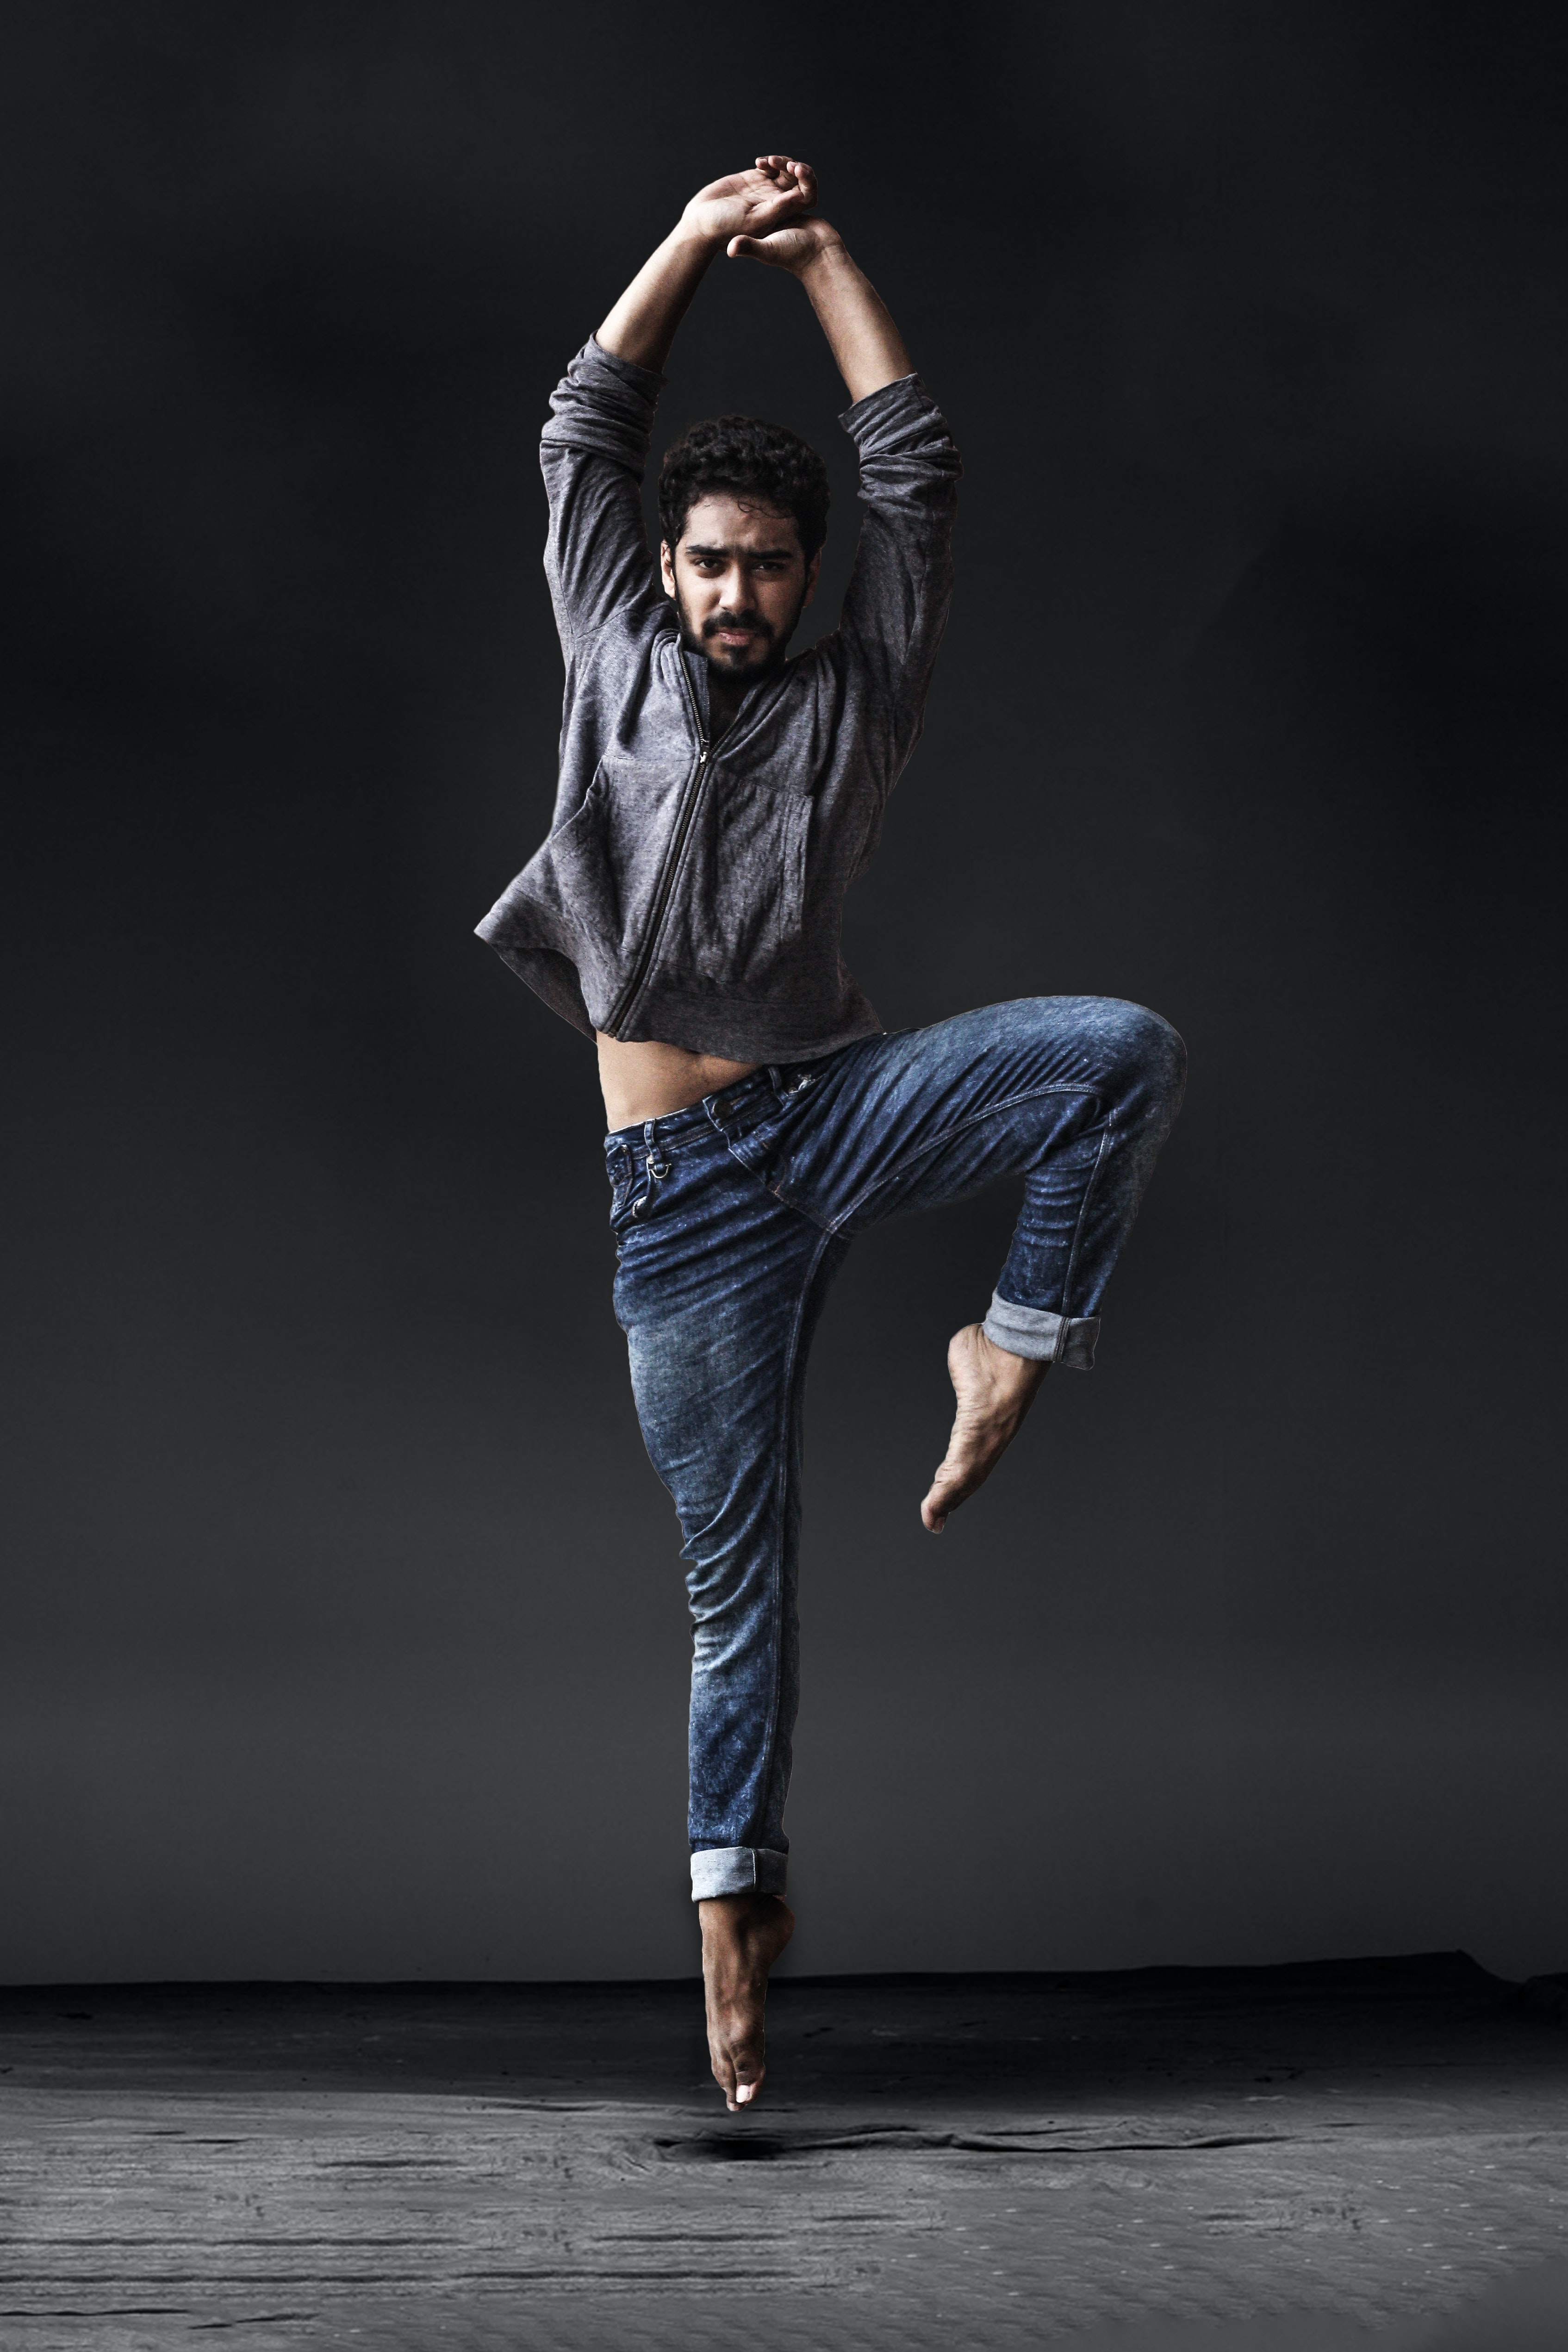 Best Ballet Dancers Photo · 100% Free Downloads